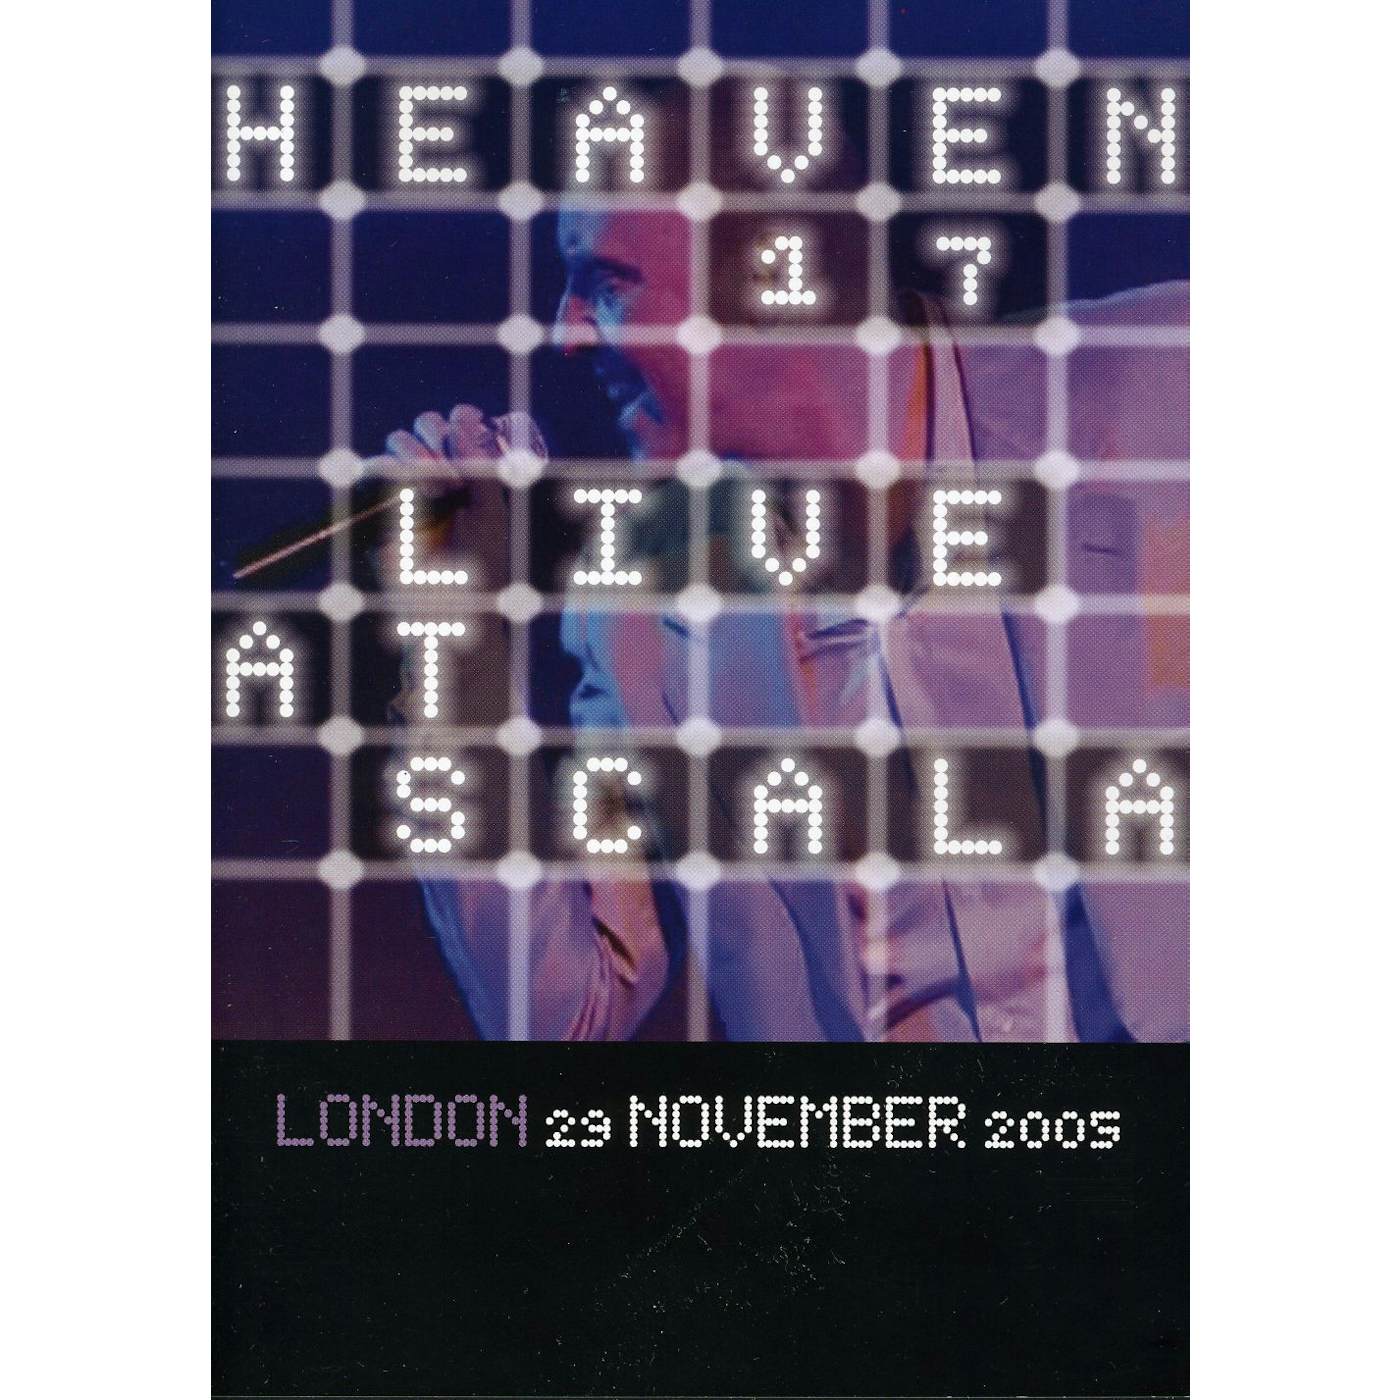 Heaven 17 LIVE AT SCALA LONDON DVD